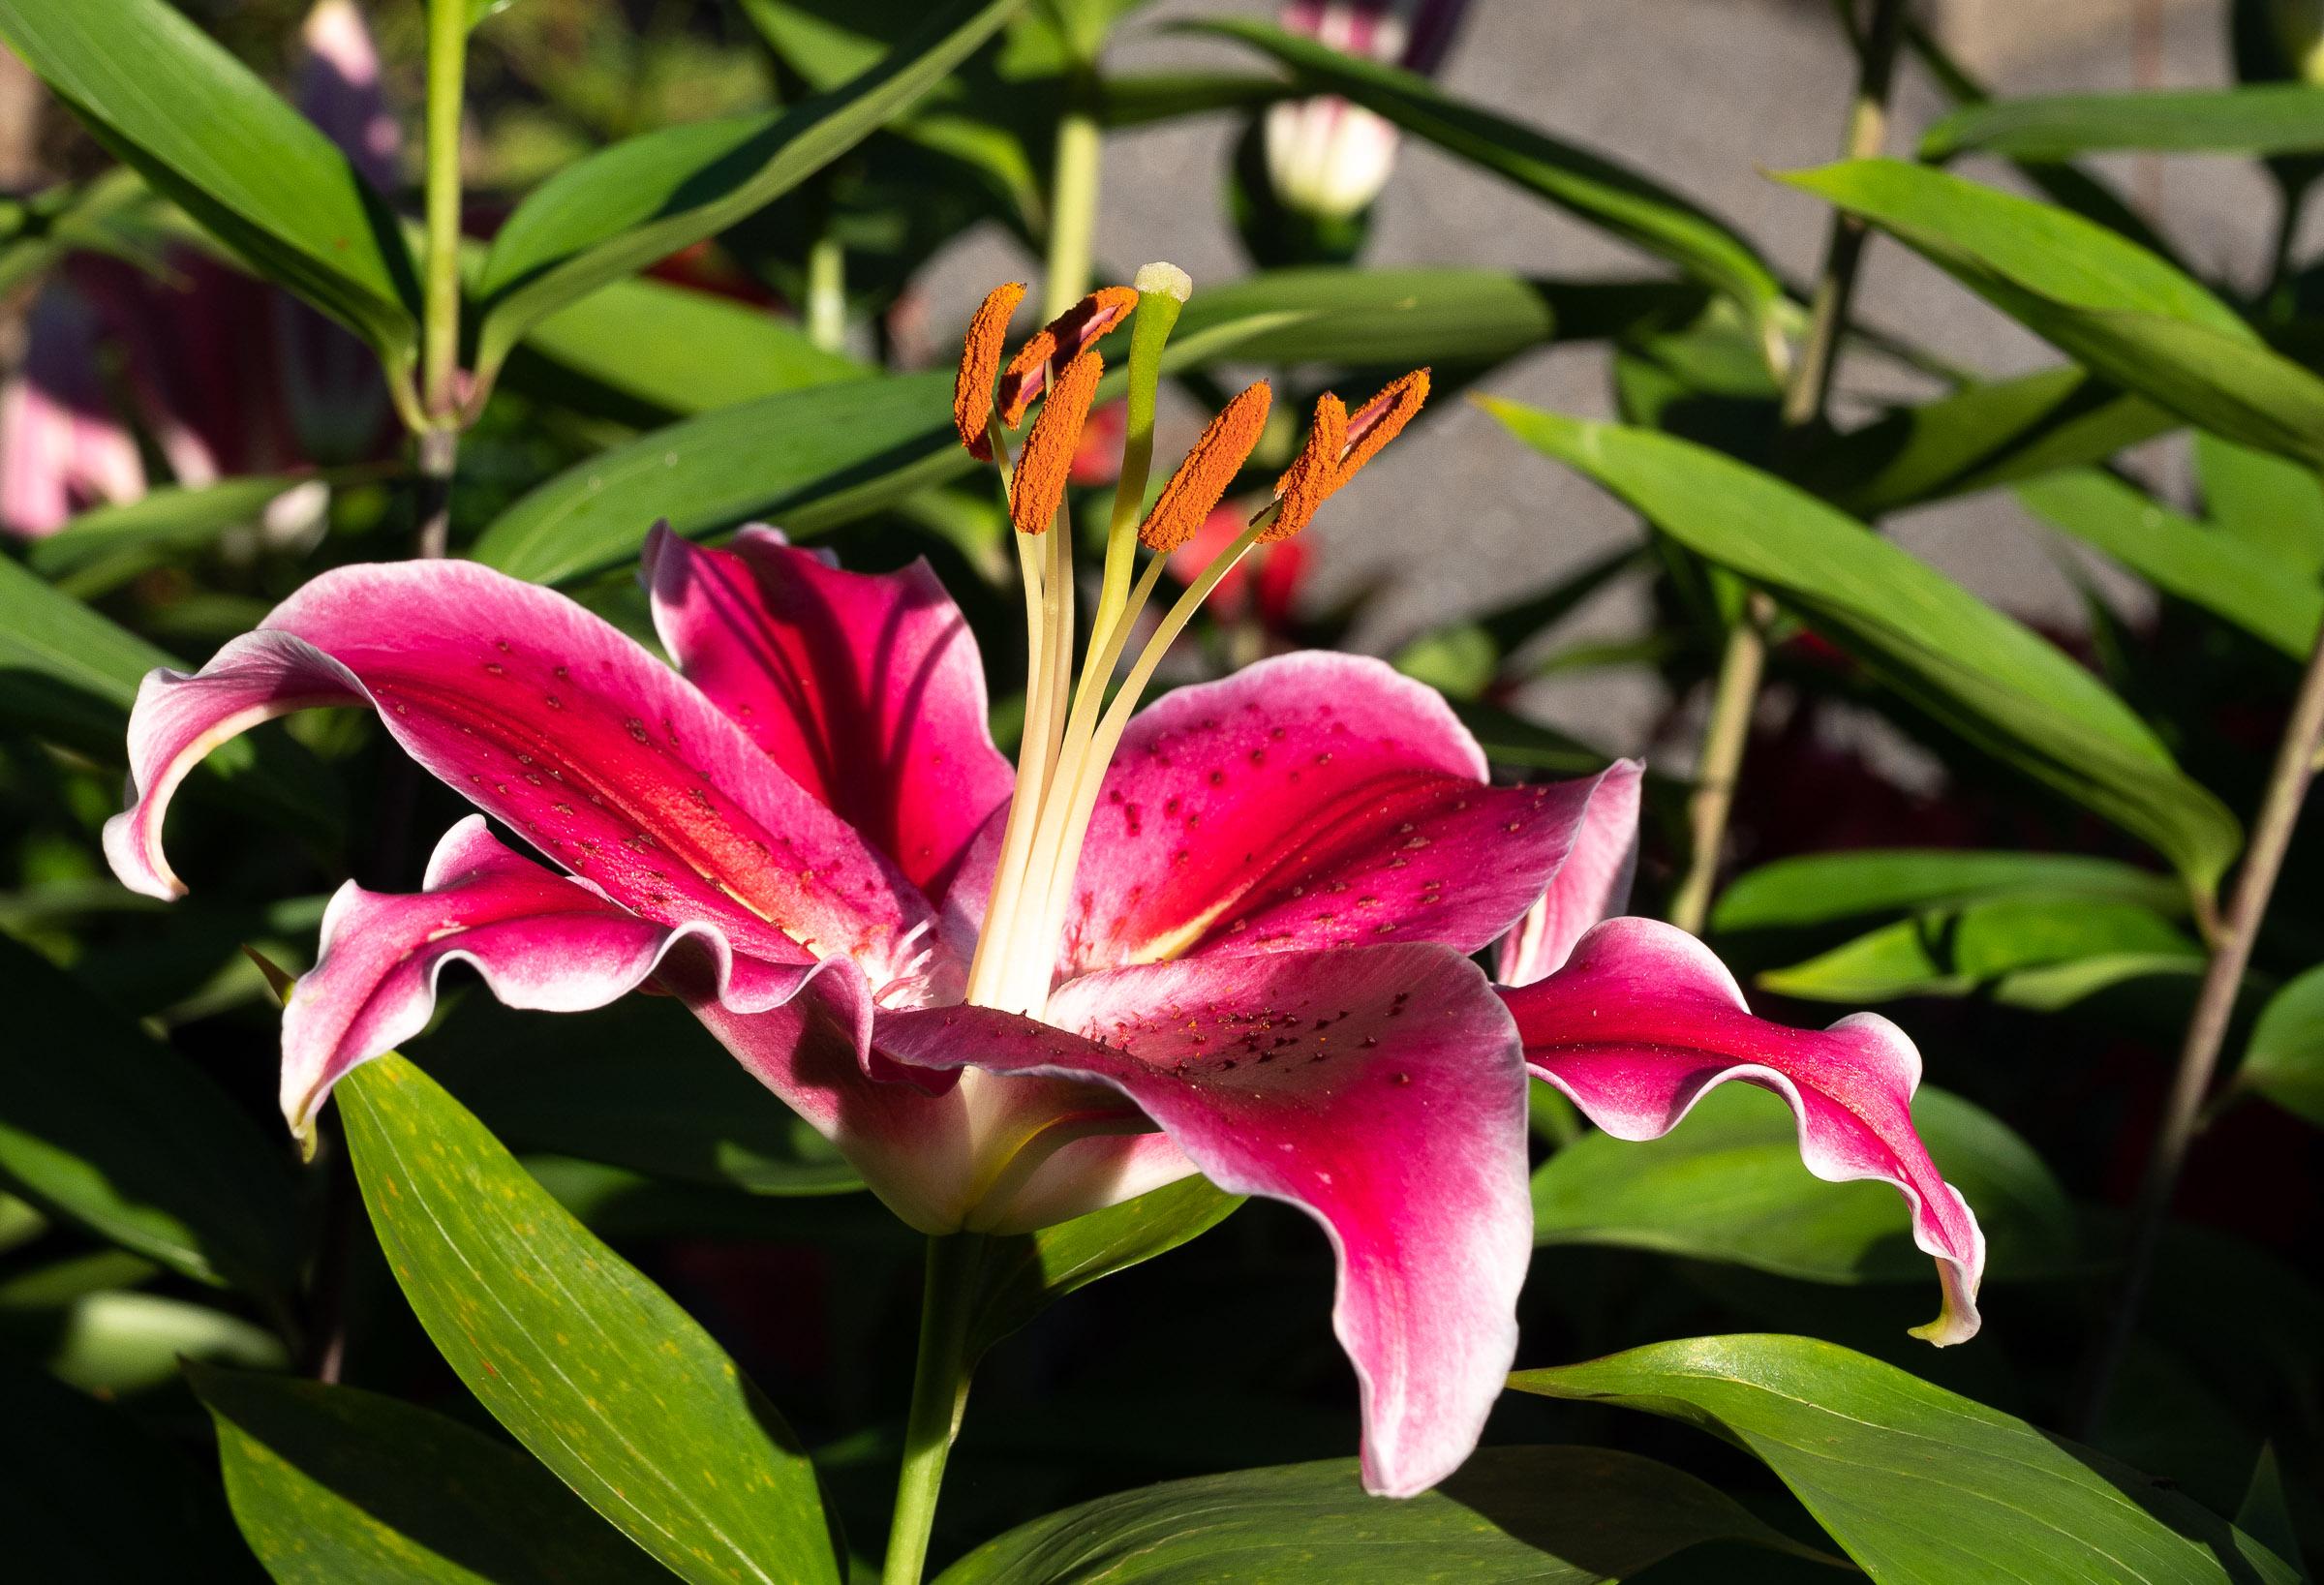 Stargazer lily is an Oriental_hybrid